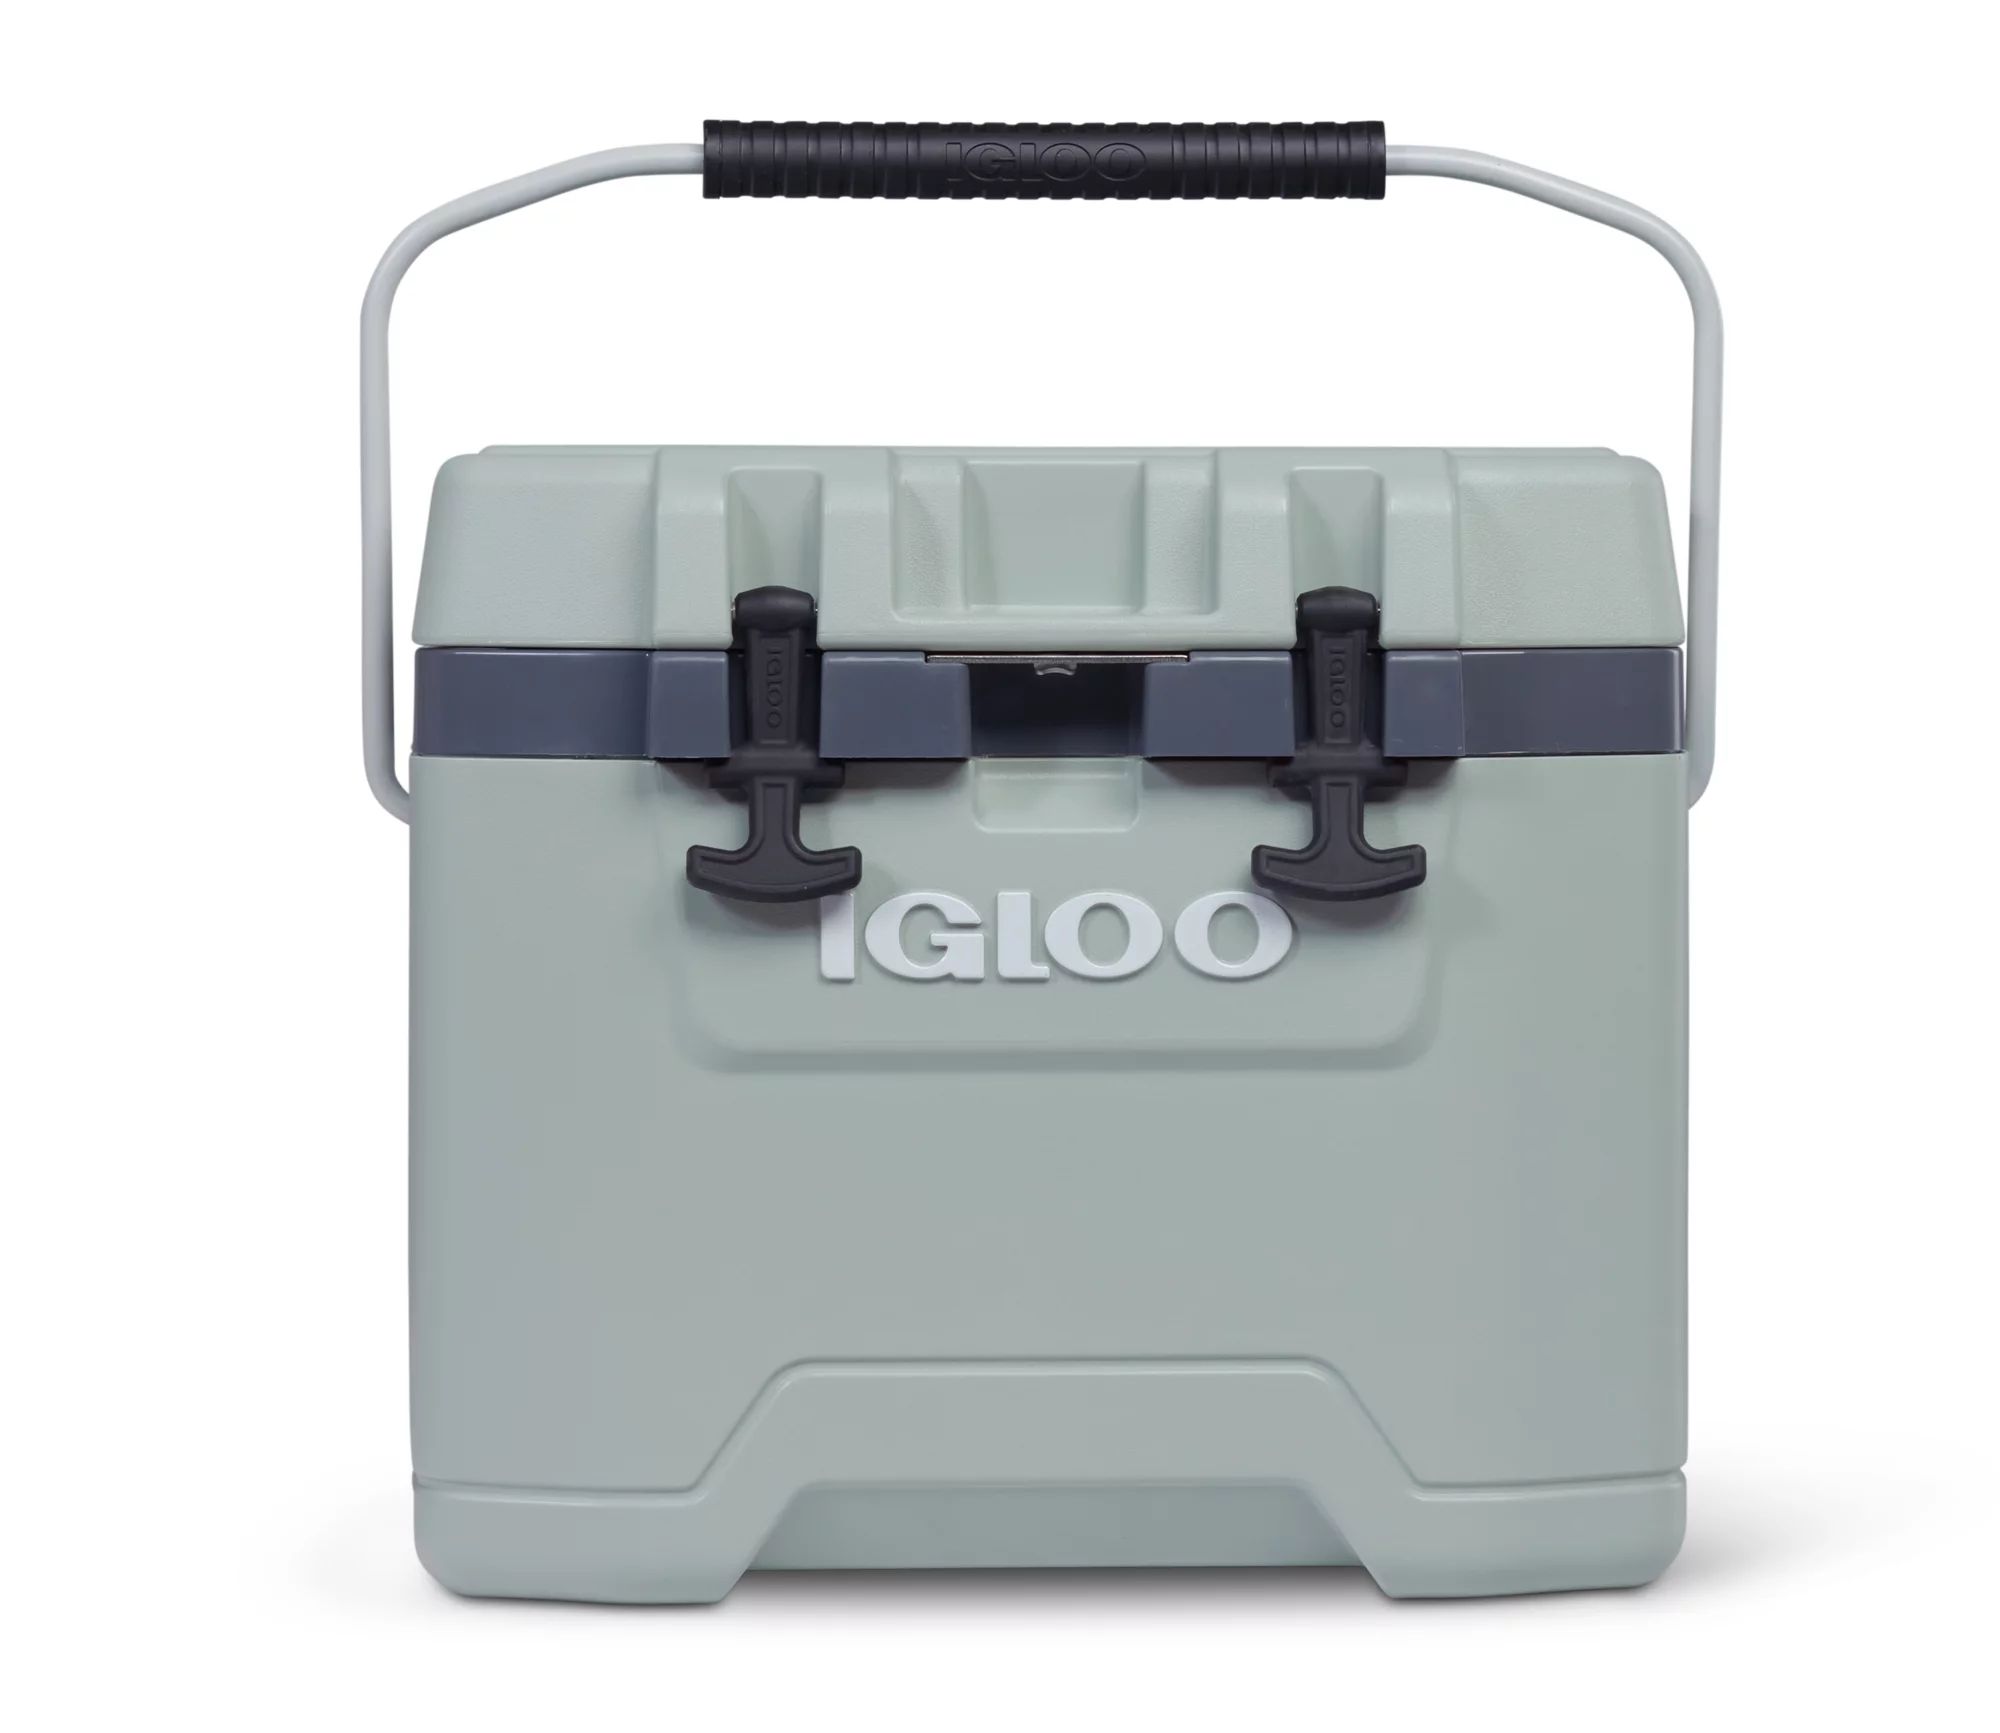 Igloo Overland 25 qt. Ice Chest Cooler, Green | Walmart (US)